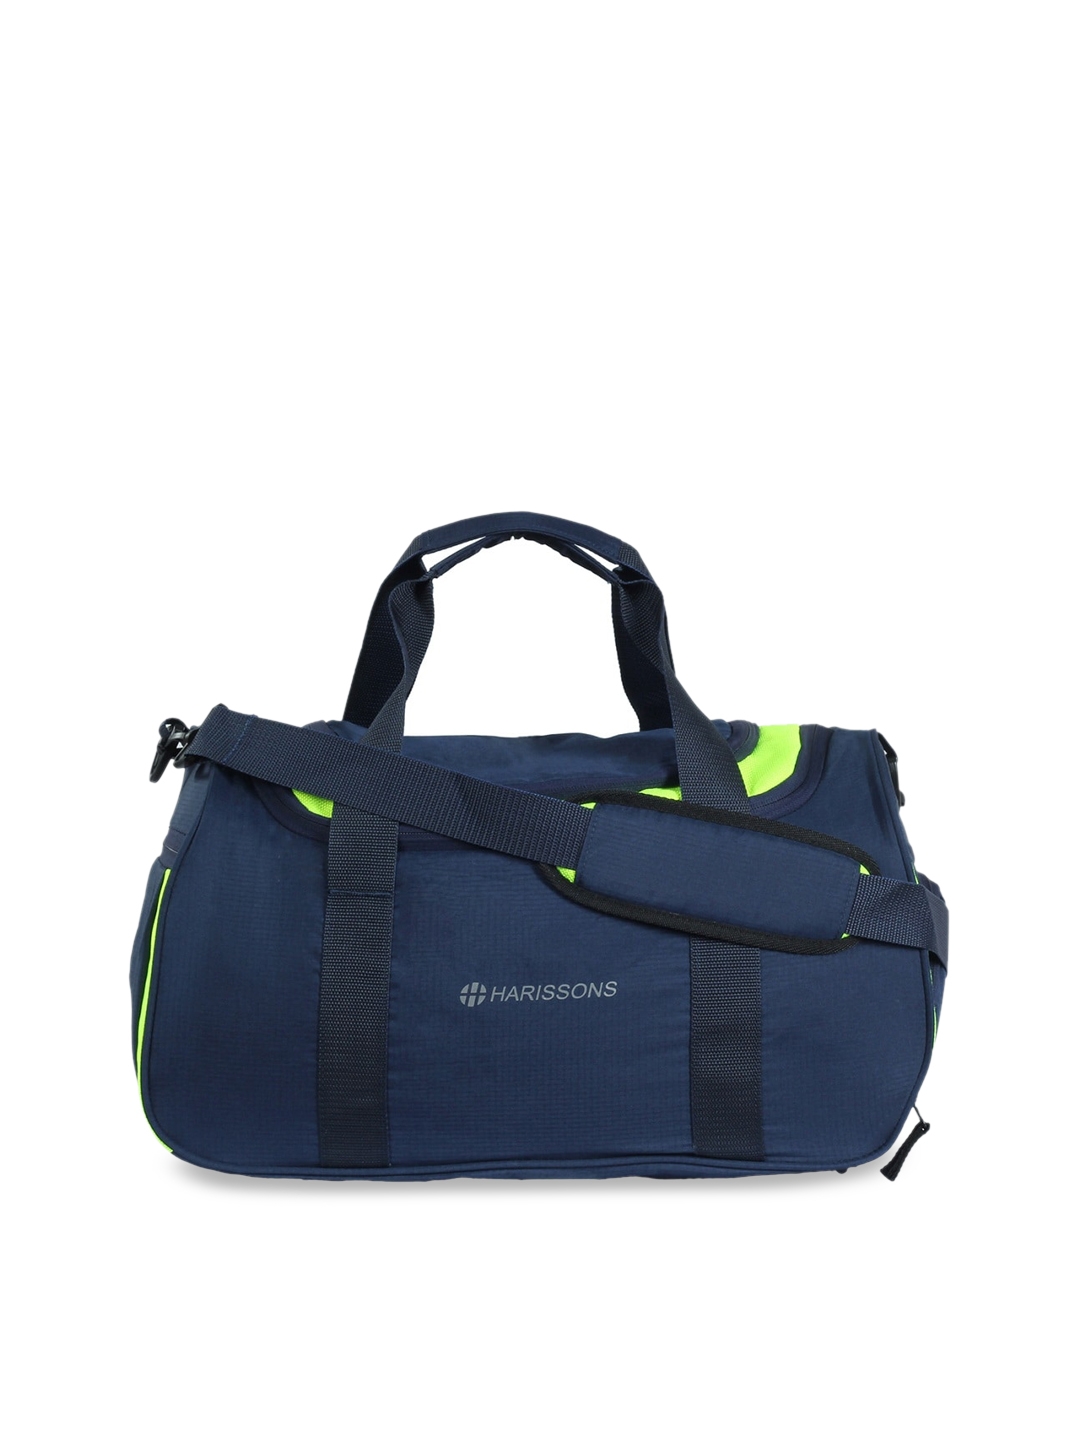 Harissons Adult Navy Blue   Fluorescent Green Float Gym Travel Duffel Bag